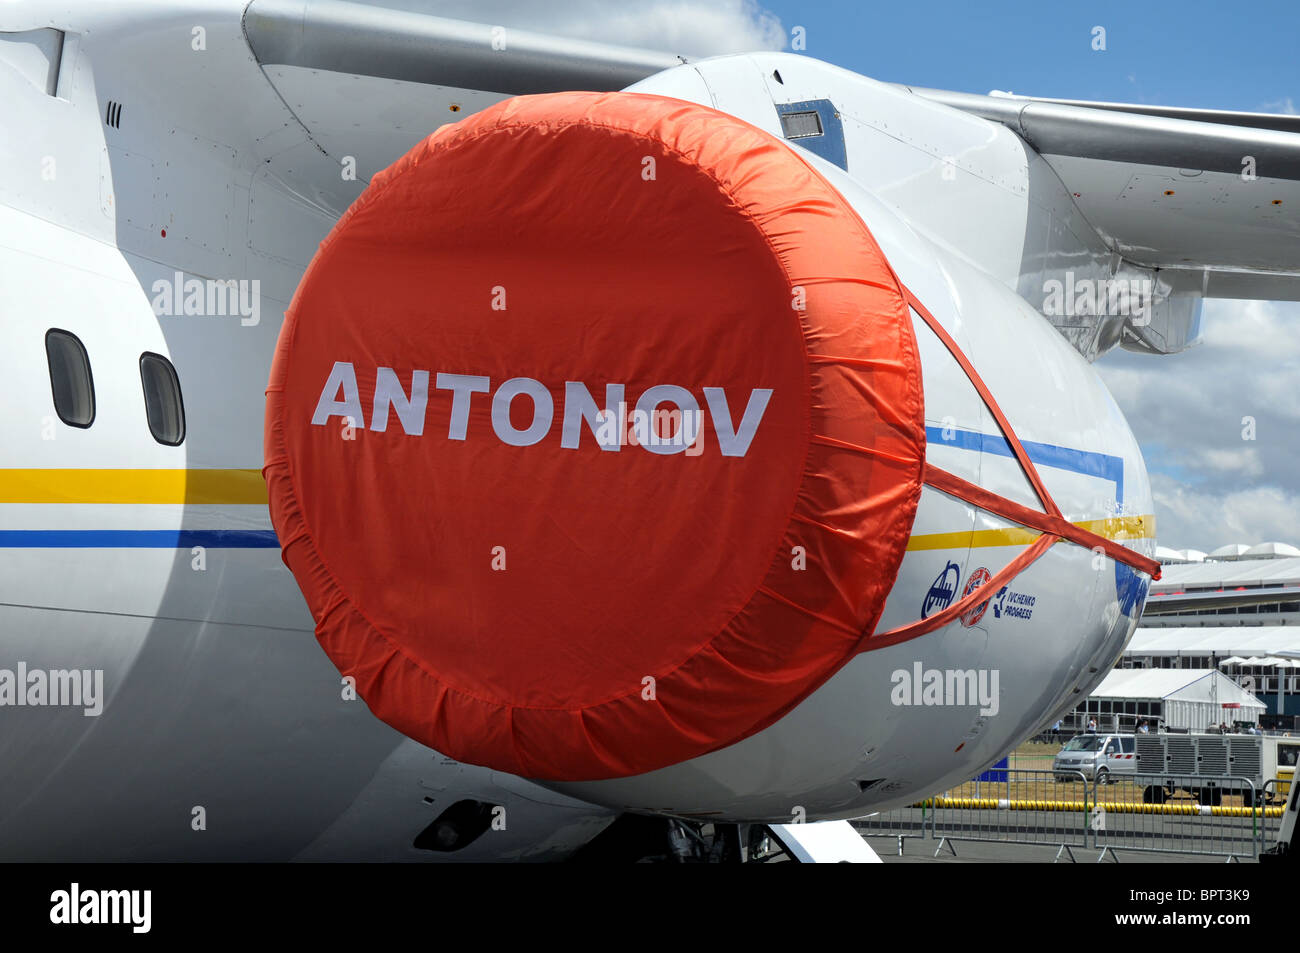 Antonov Foto Stock